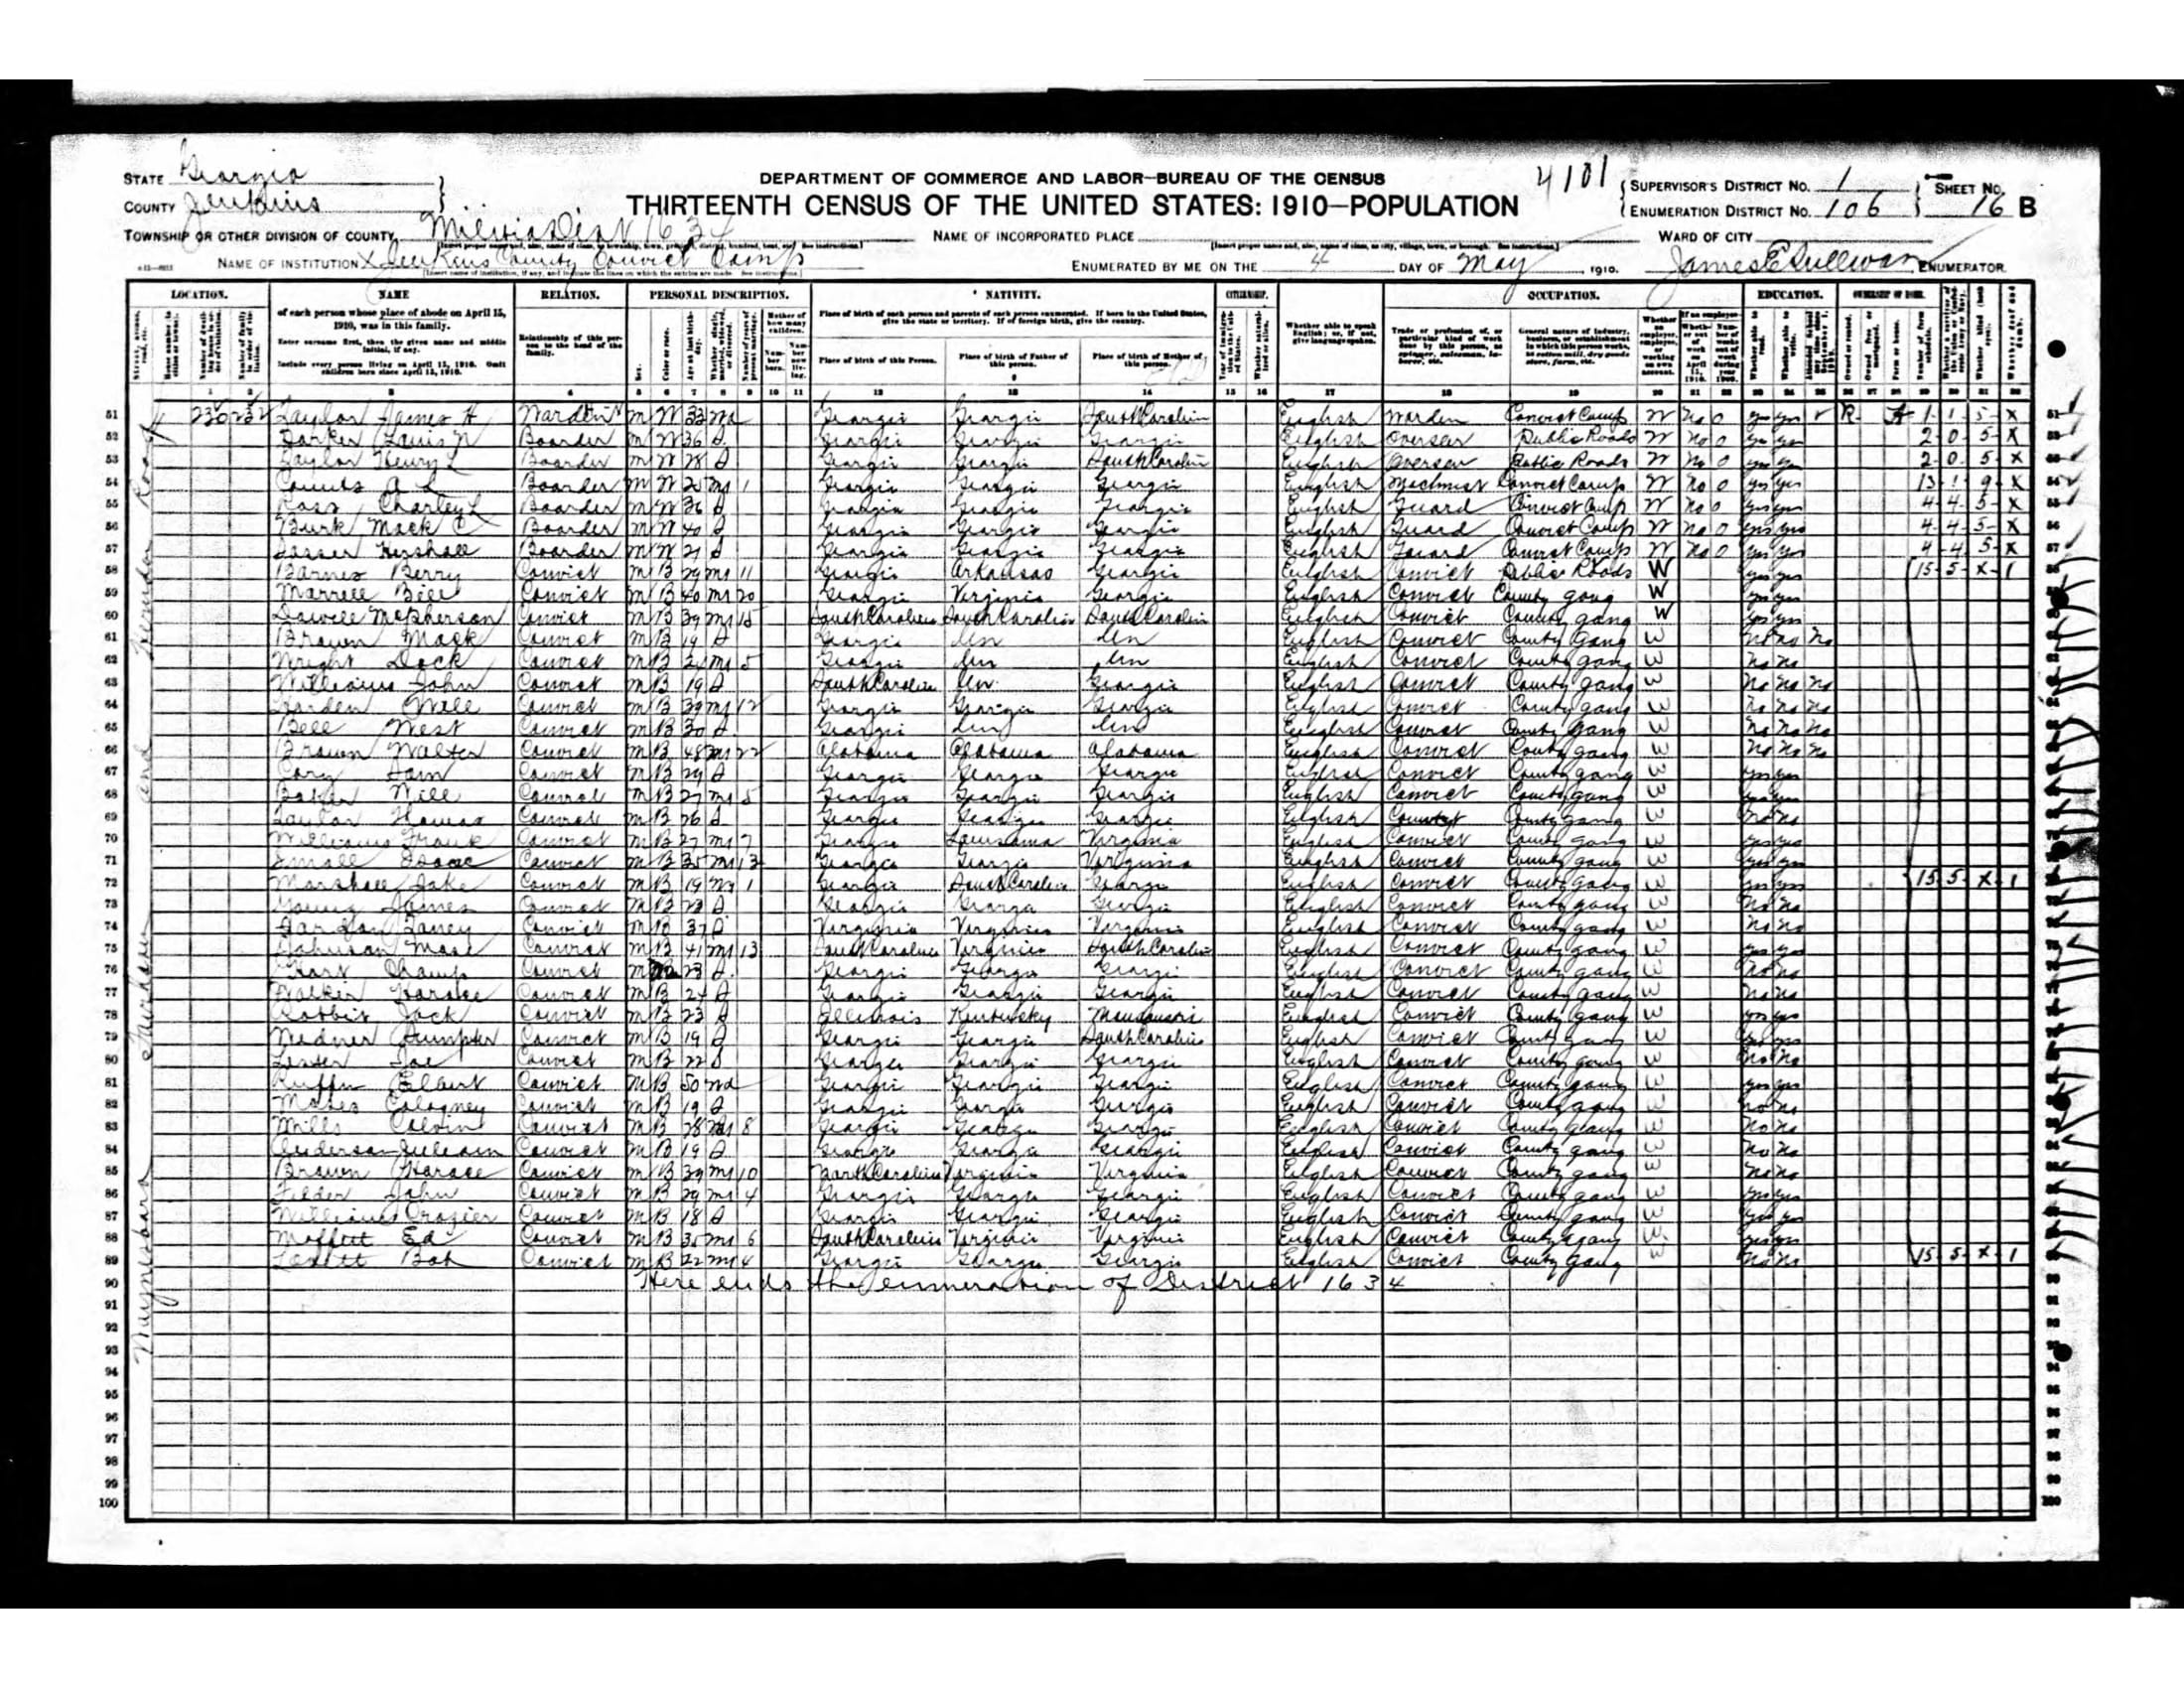 Crozier in 1910 Census